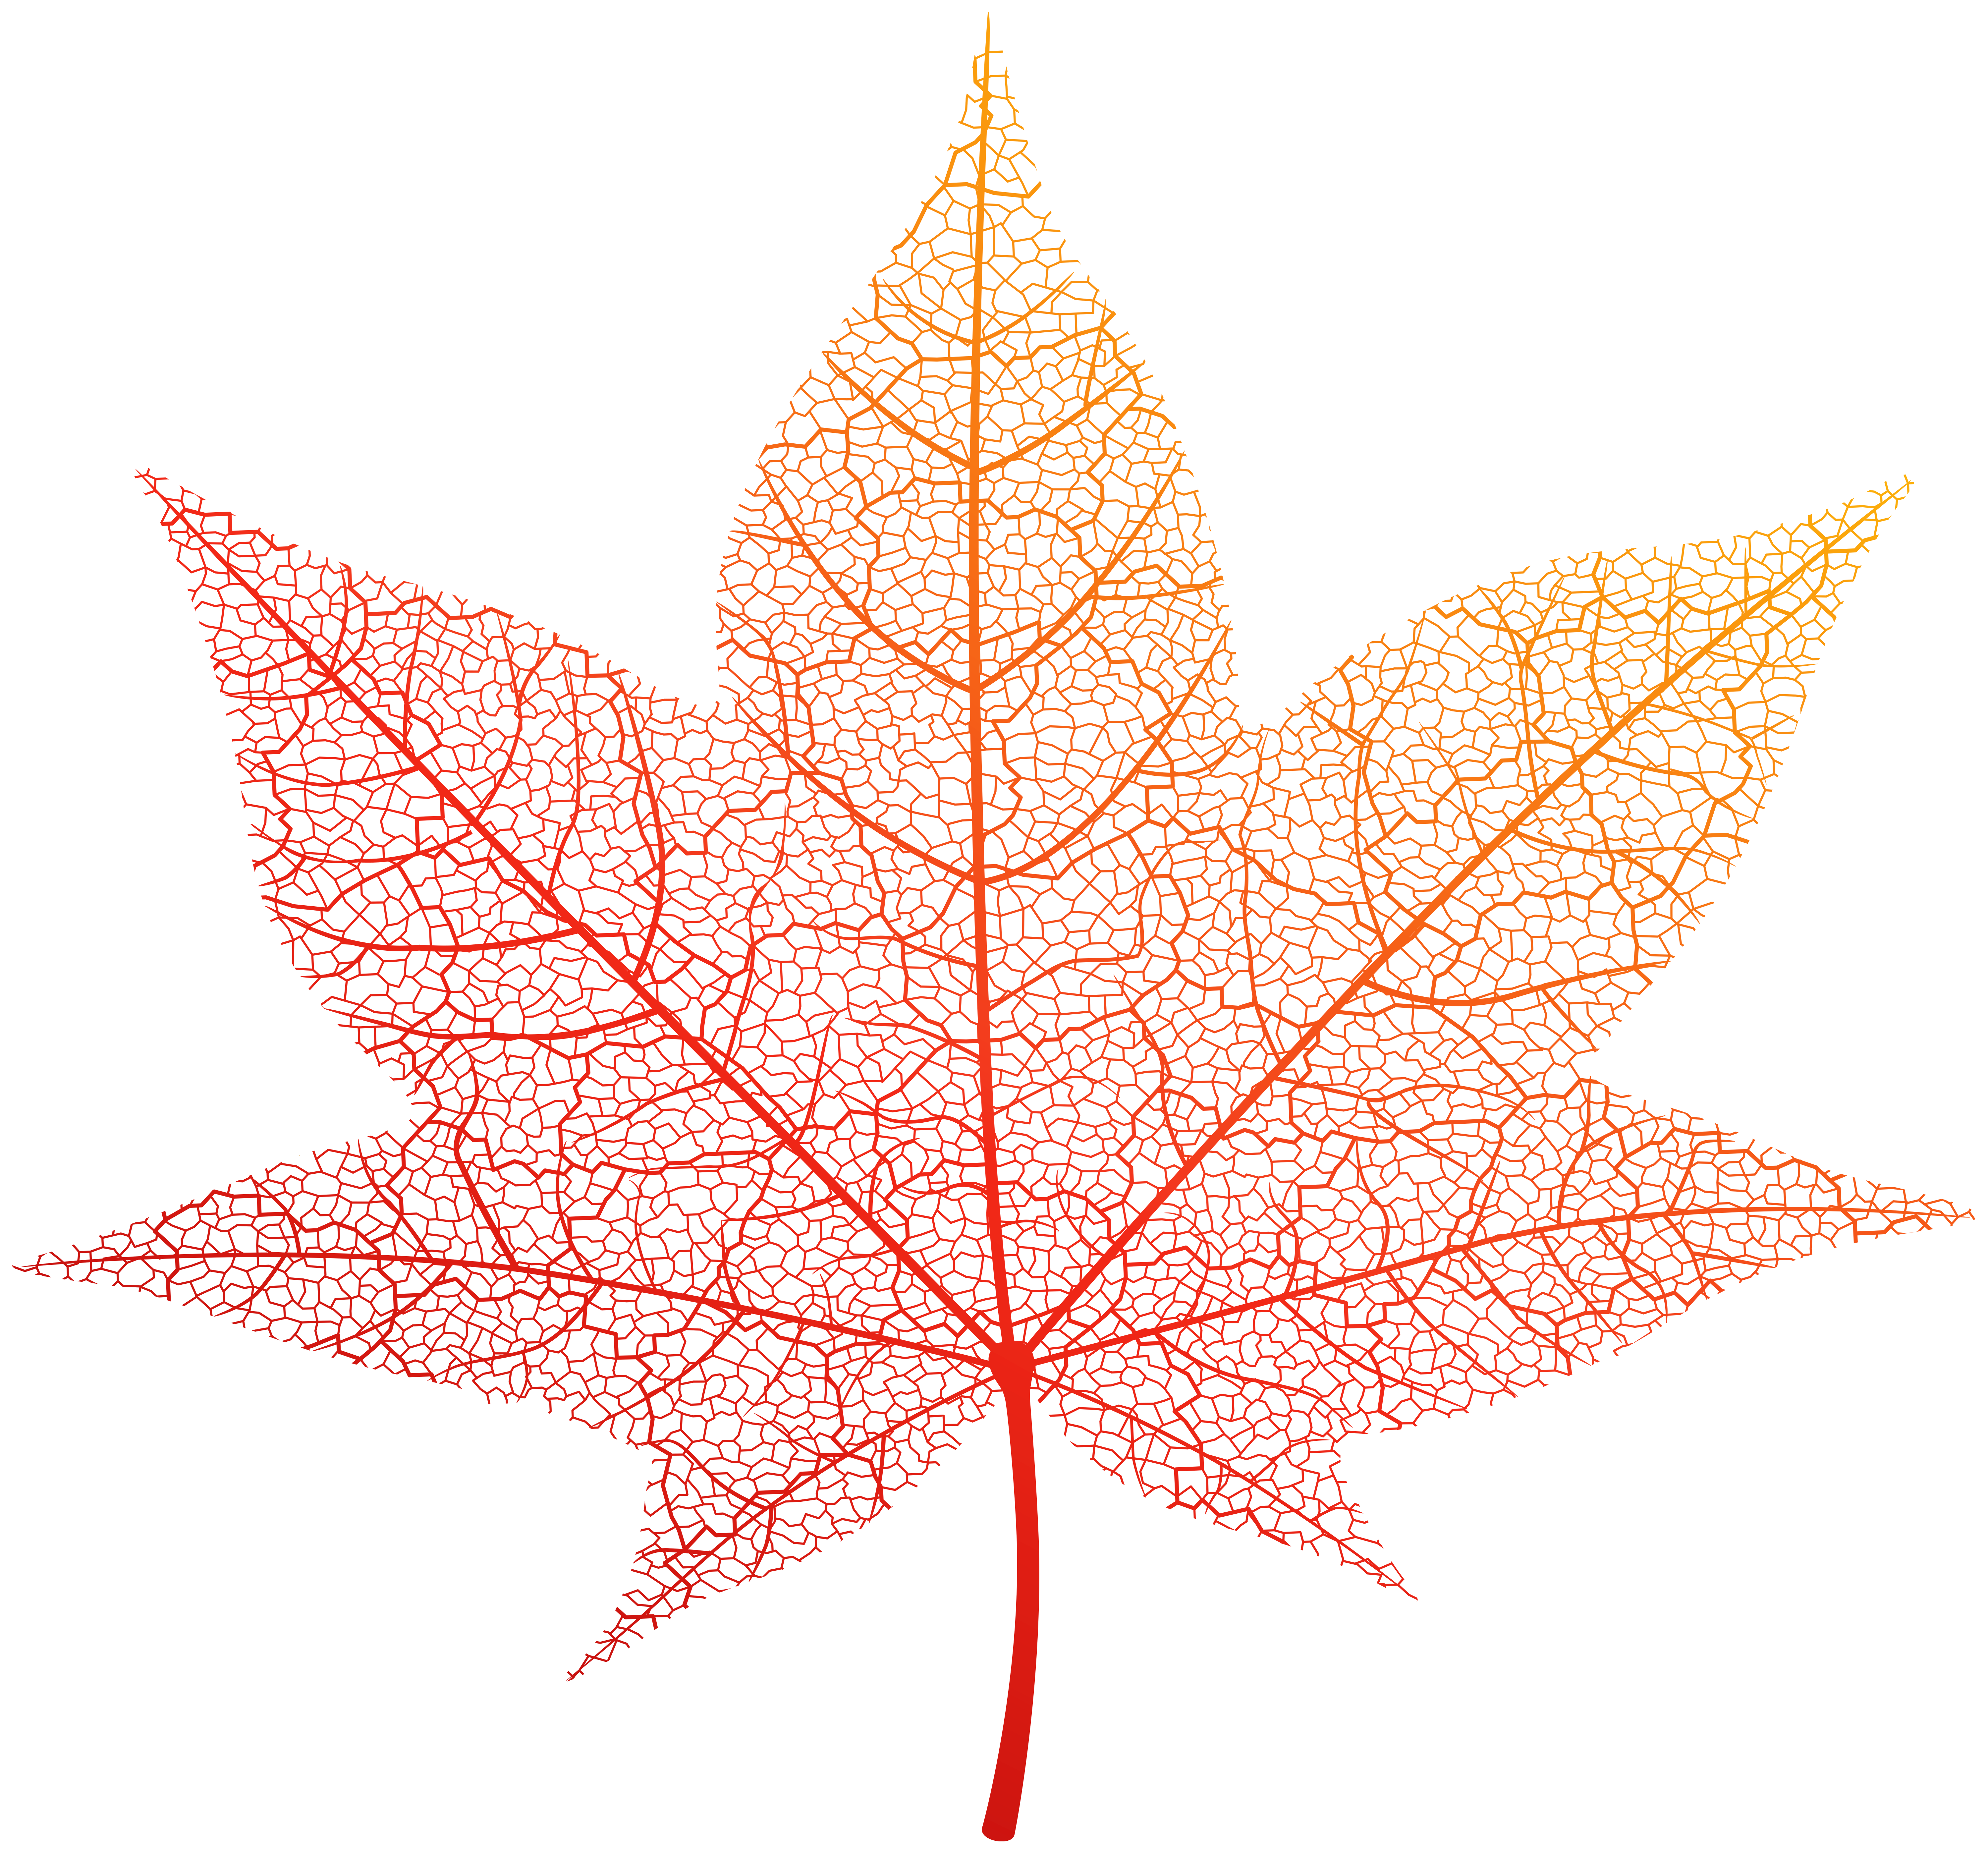 Transparent Orange Autumn Leaf PNG Clip Art Image | Gallery ...